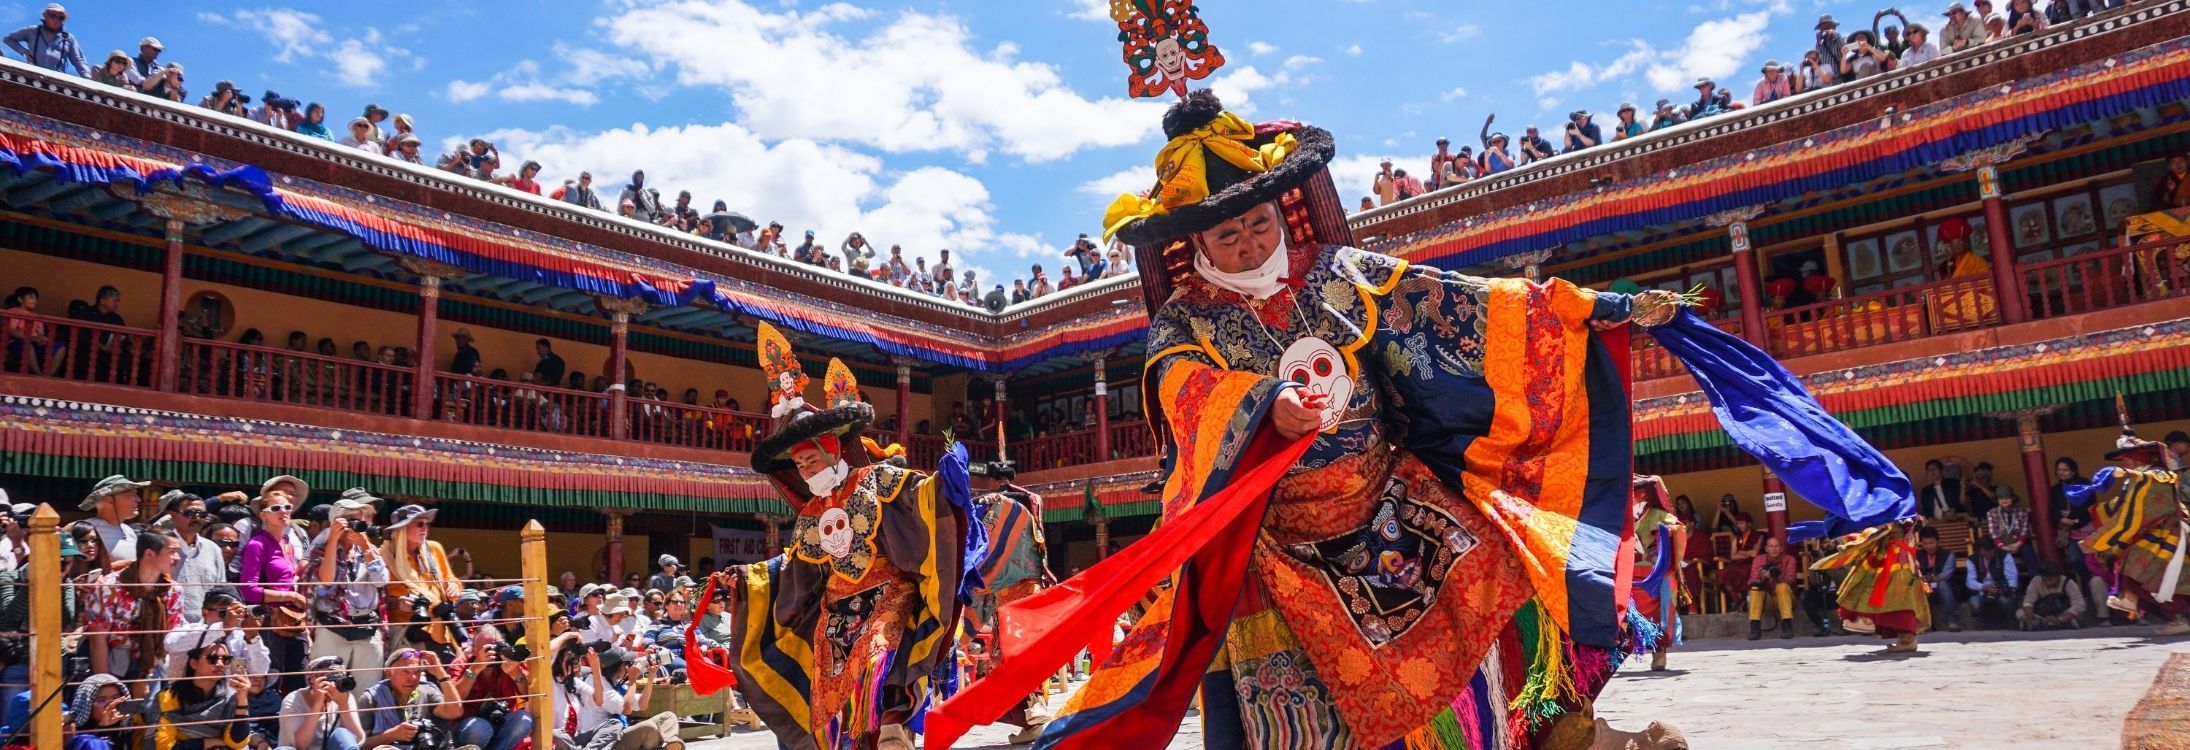 The Ladakh Festival - A Visual Feast